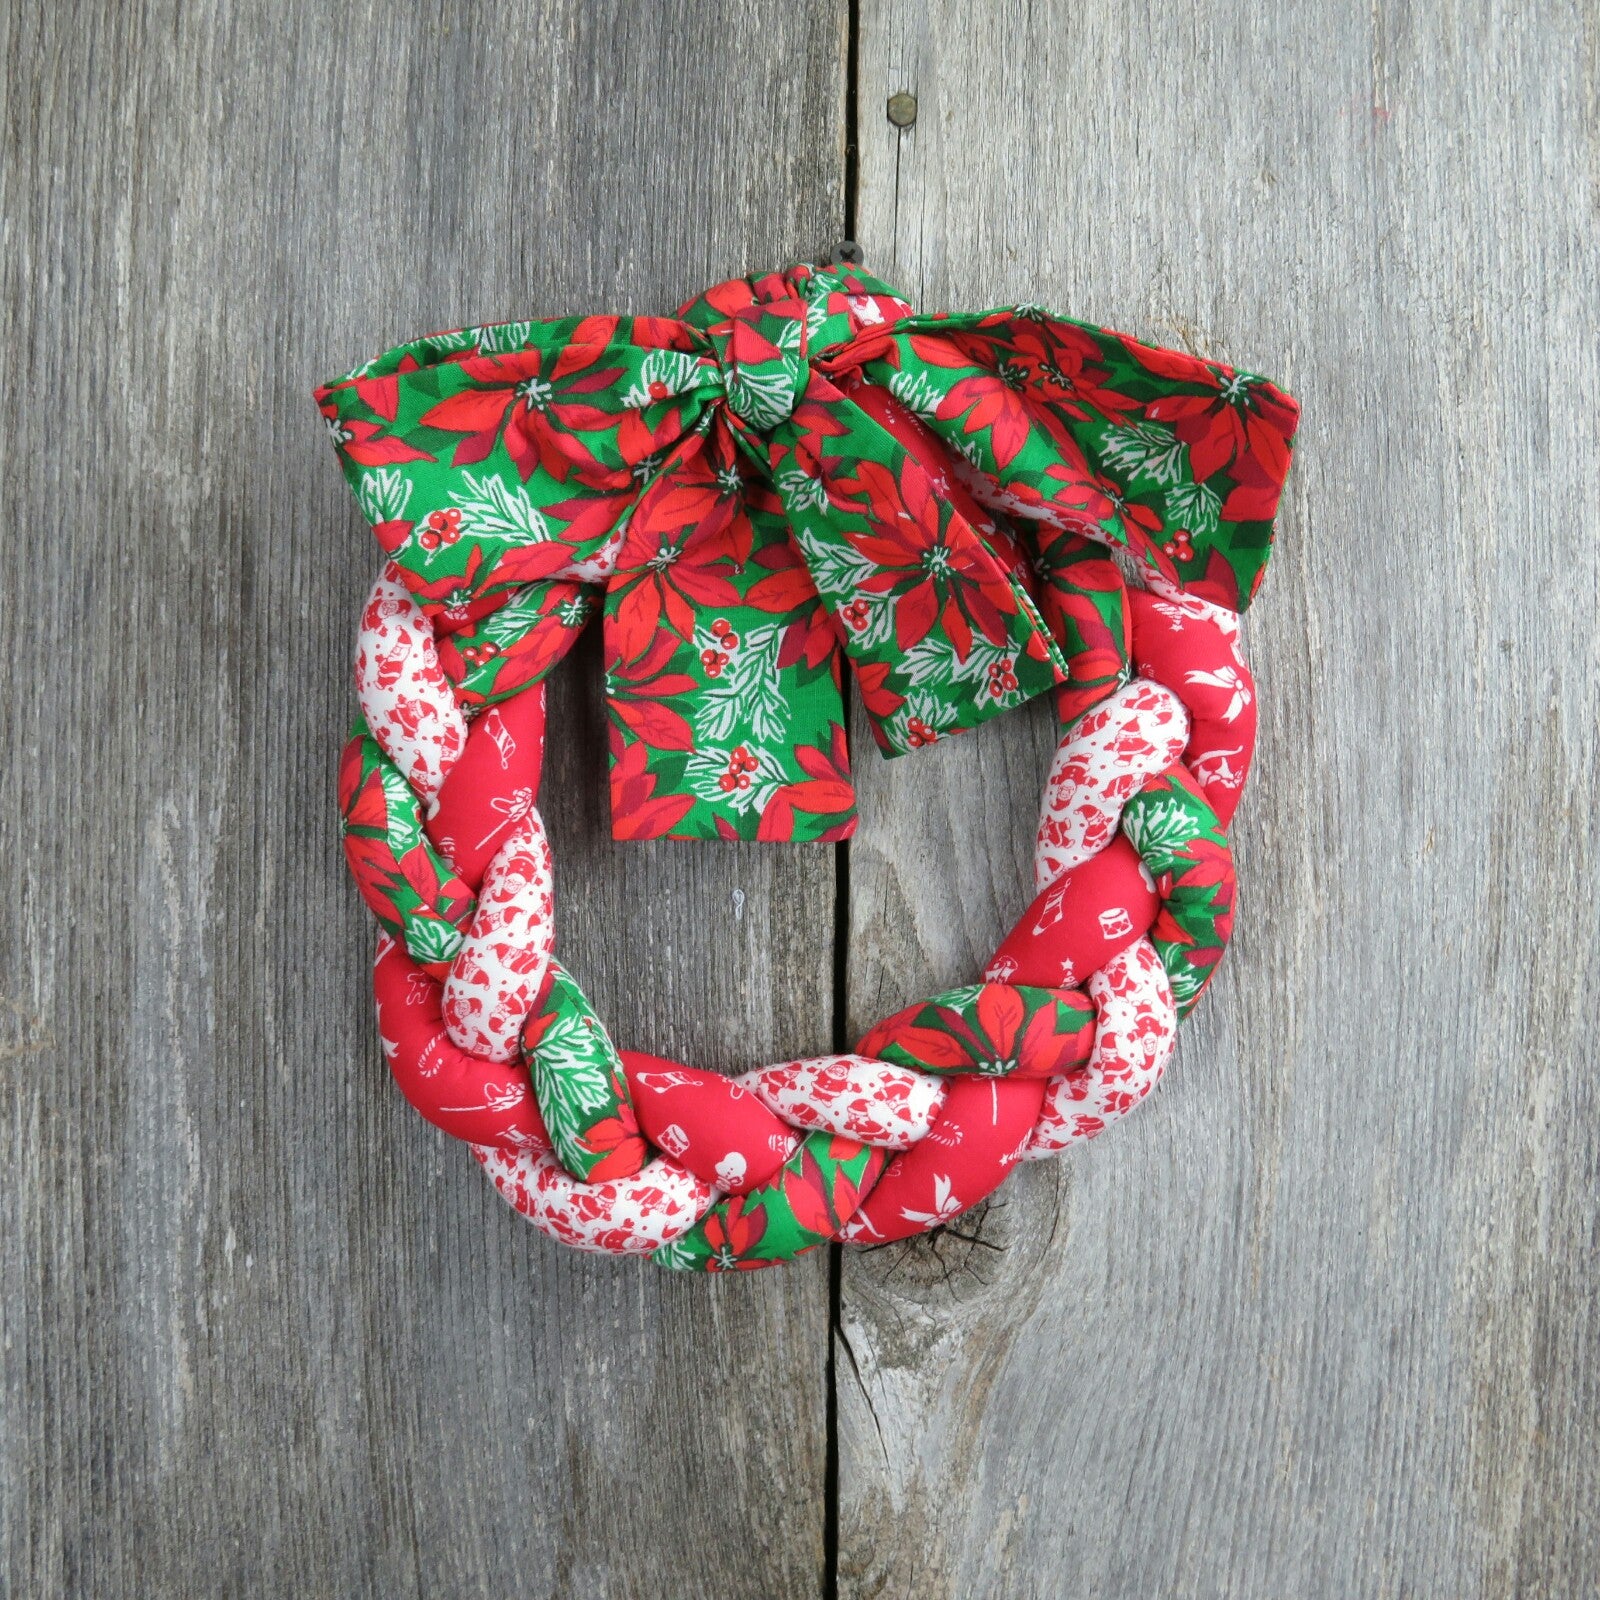 Vintage Handmade Christmas Wreath Twisted Fabric Red Green Santa Poinsettia Holiday Decor Door Hanger - At Grandma's Table